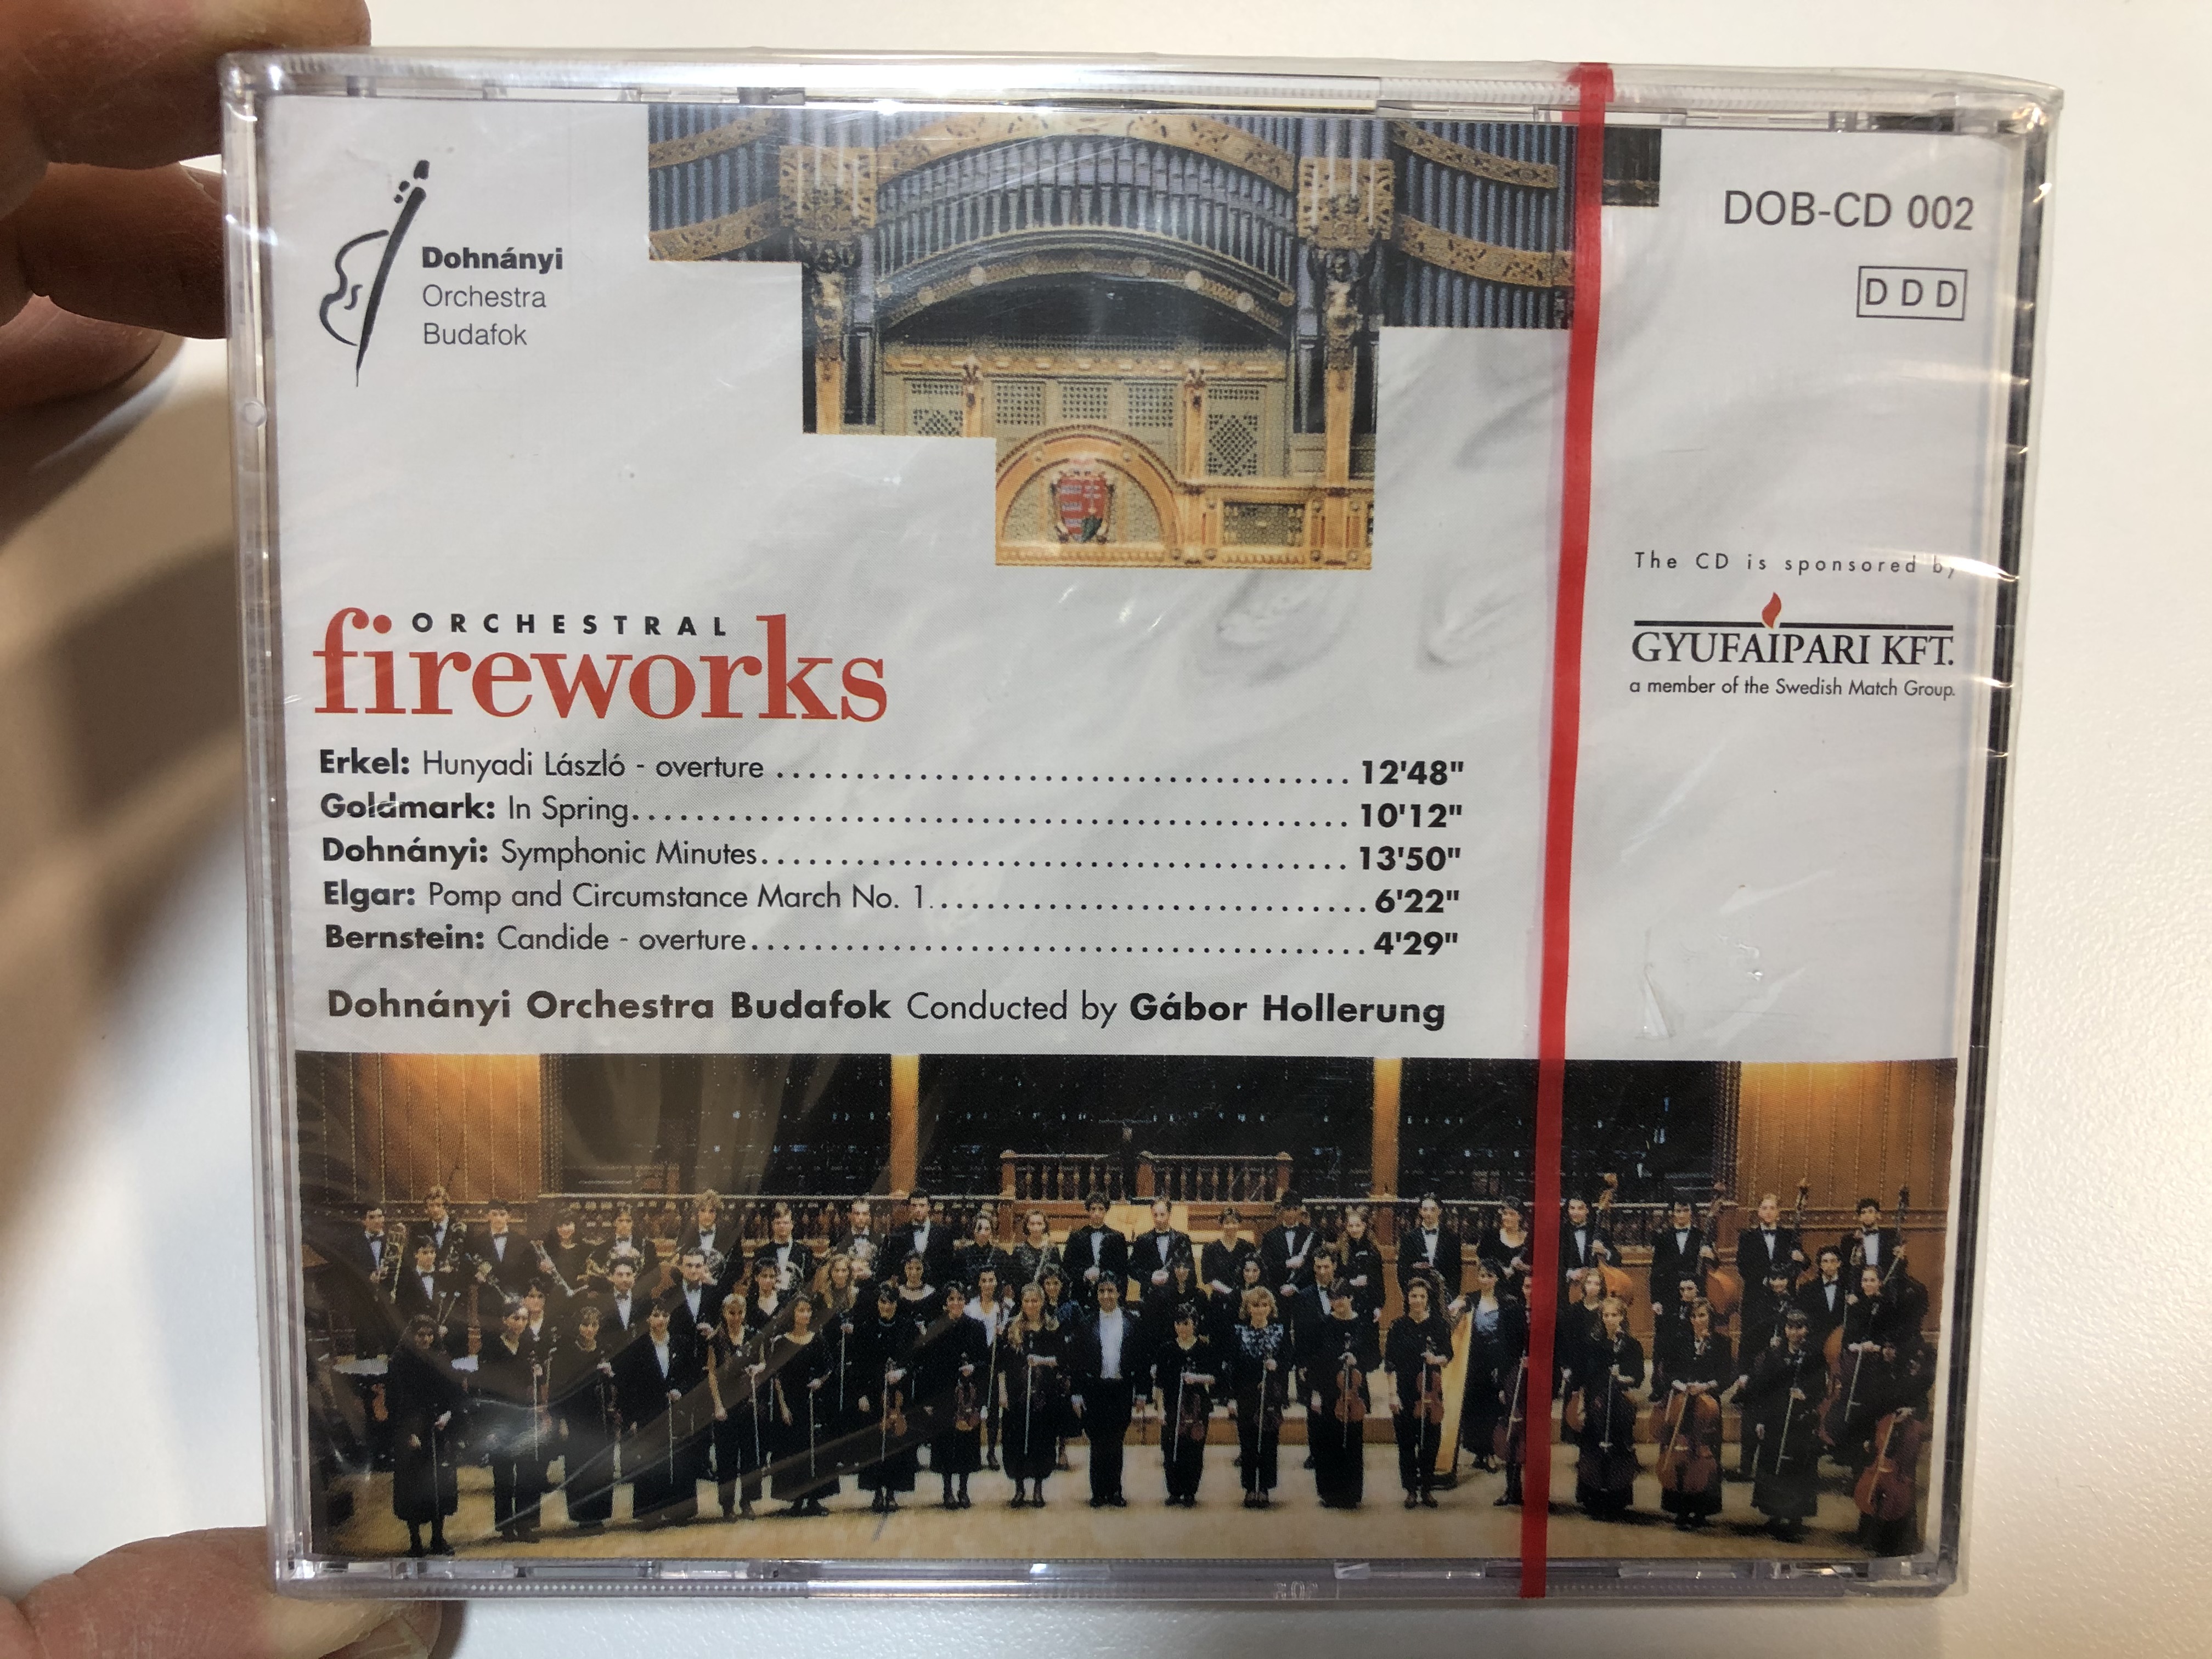 orchestral-fireworks-erkel-goldmark-dohnanyi-elgar-bernstein-dohnanyi-orchestra-budafok-gabor-hollerung-dohnanyi-orchestra-budafok-audio-cd-dob-cd-002-2-.jpg